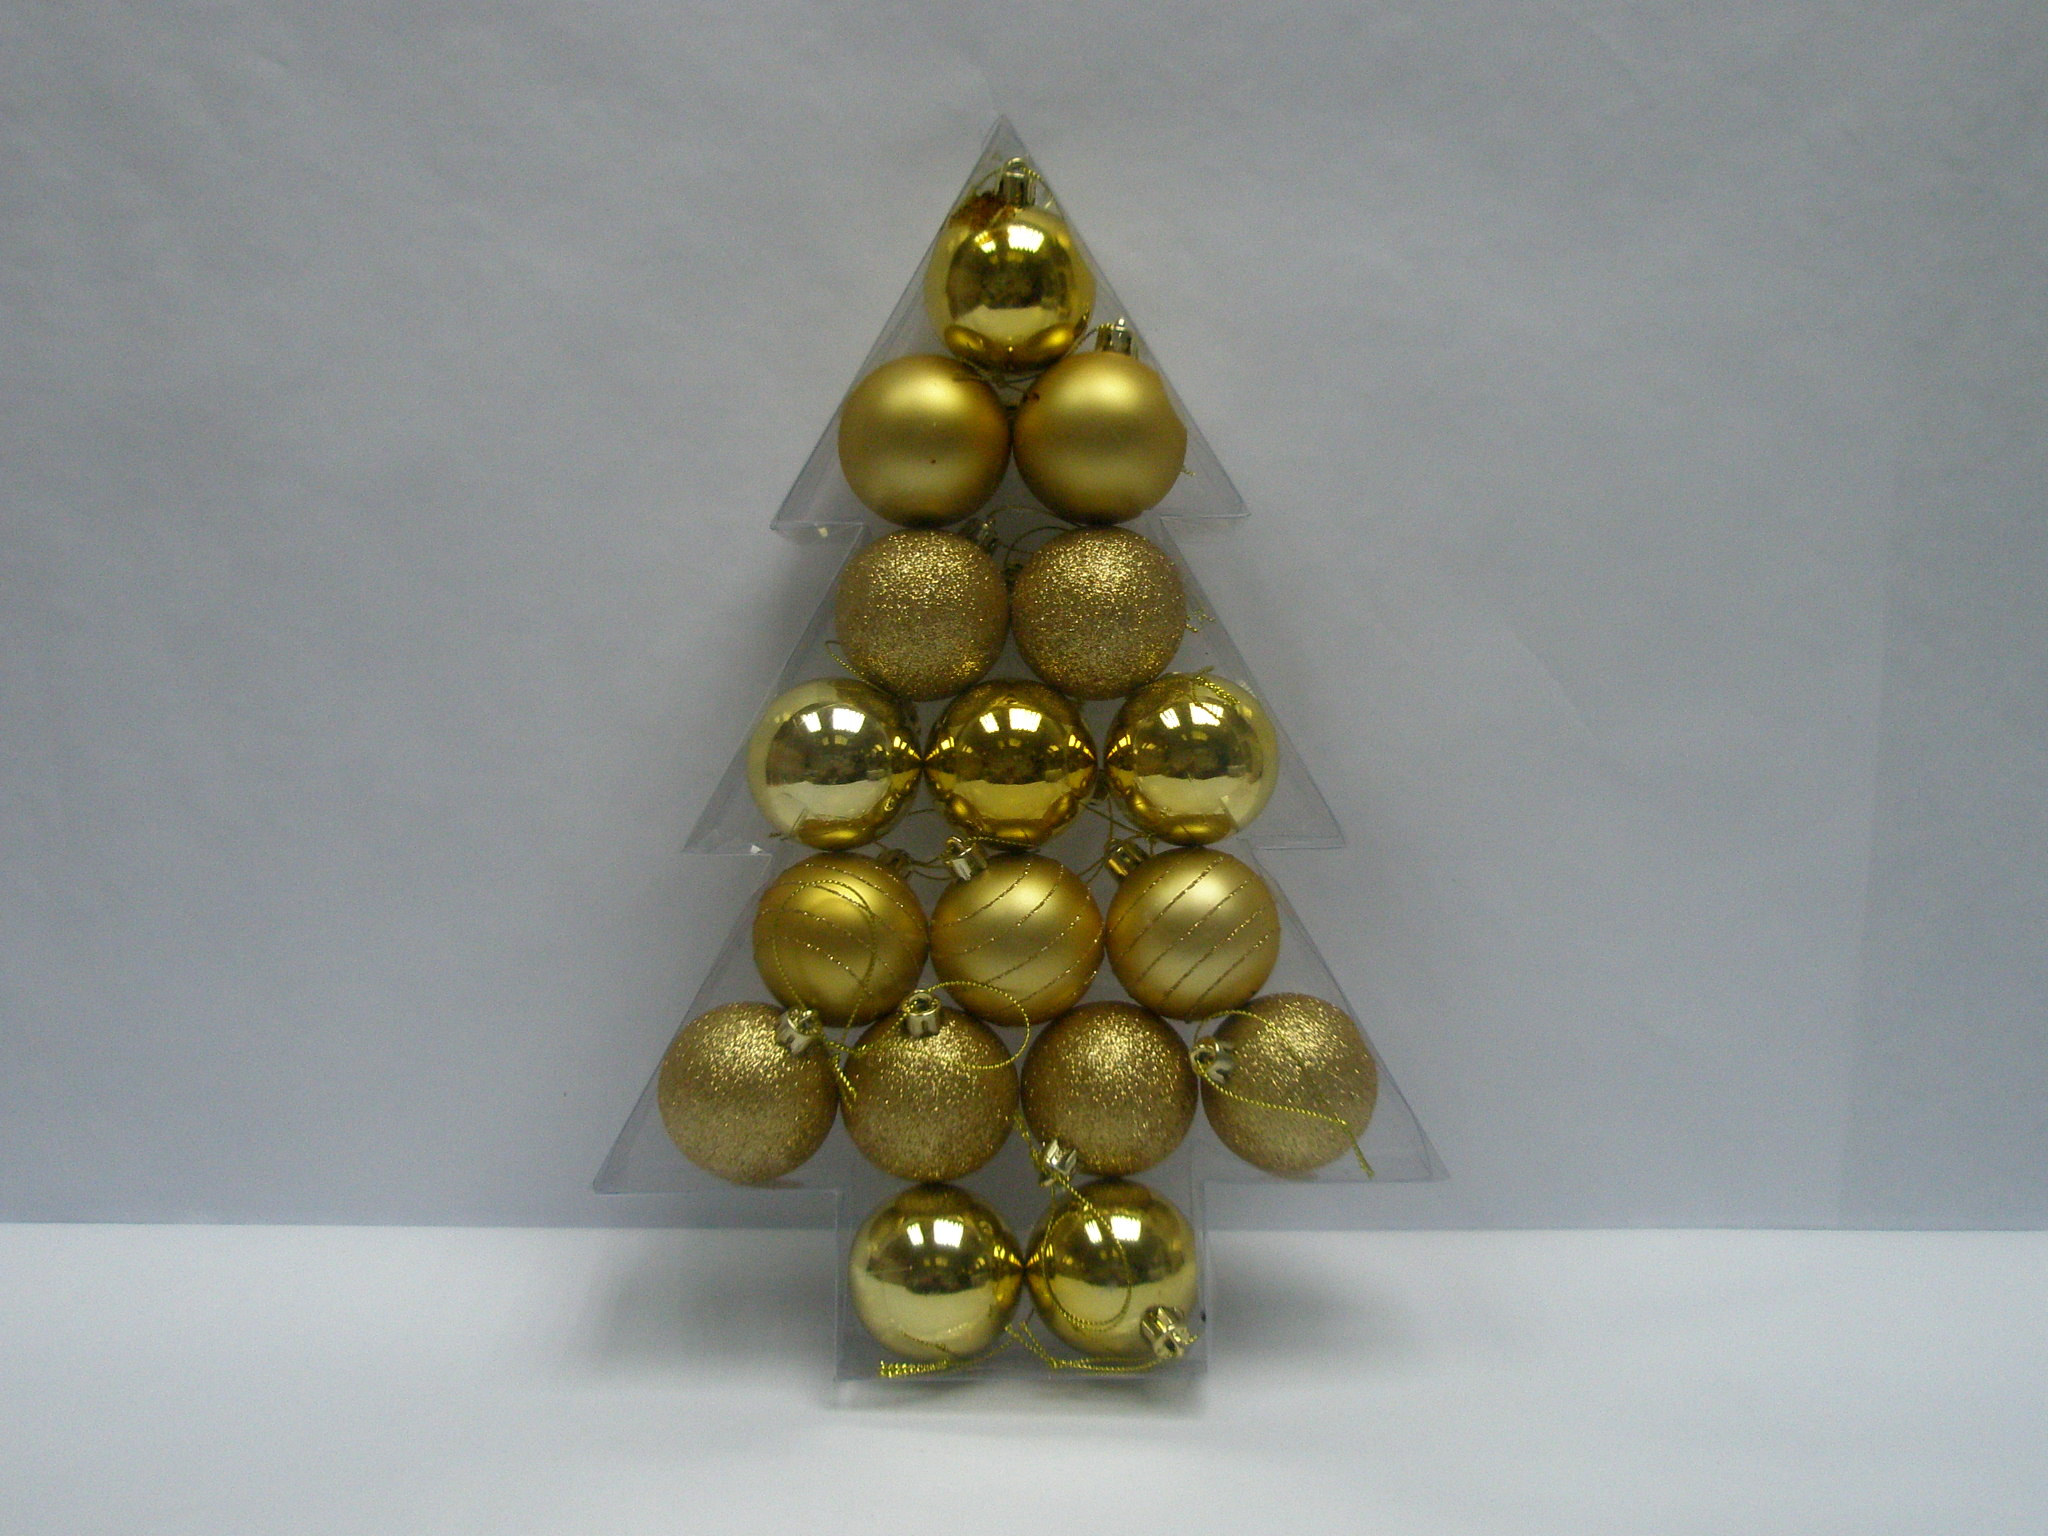 Promotional Christmas Ornaments Ball